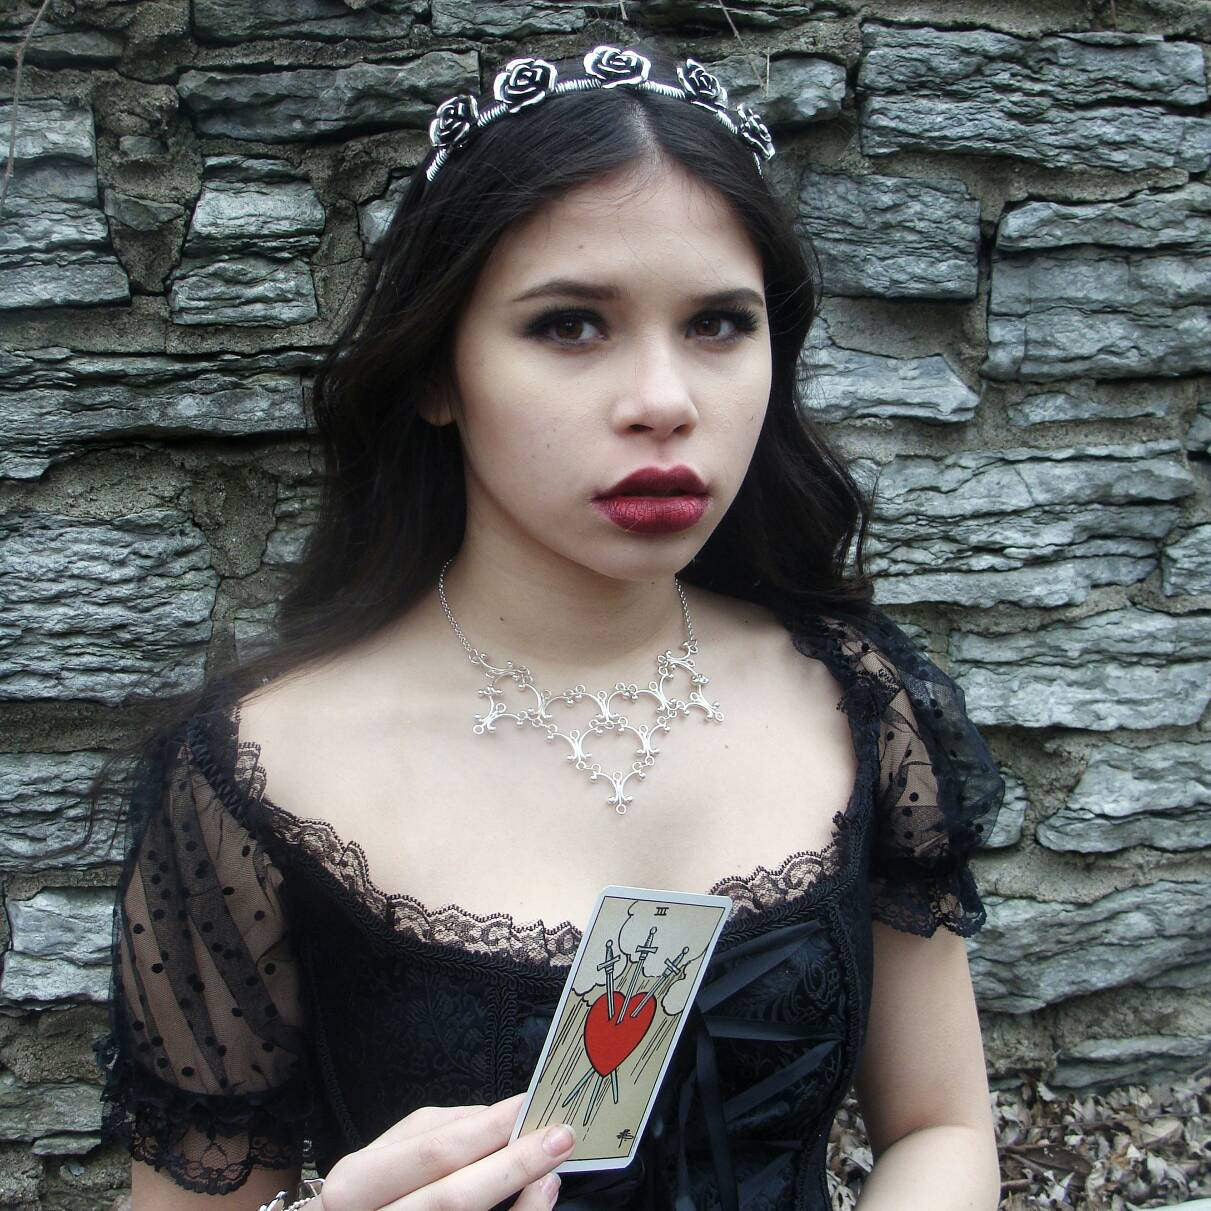 Silver Gothic Necklace - Neo Victorian Goth Jewelry - Ren Faire -  Handfasting - Queen Costume - Gothic Lolita - Handmade Statement Necklace